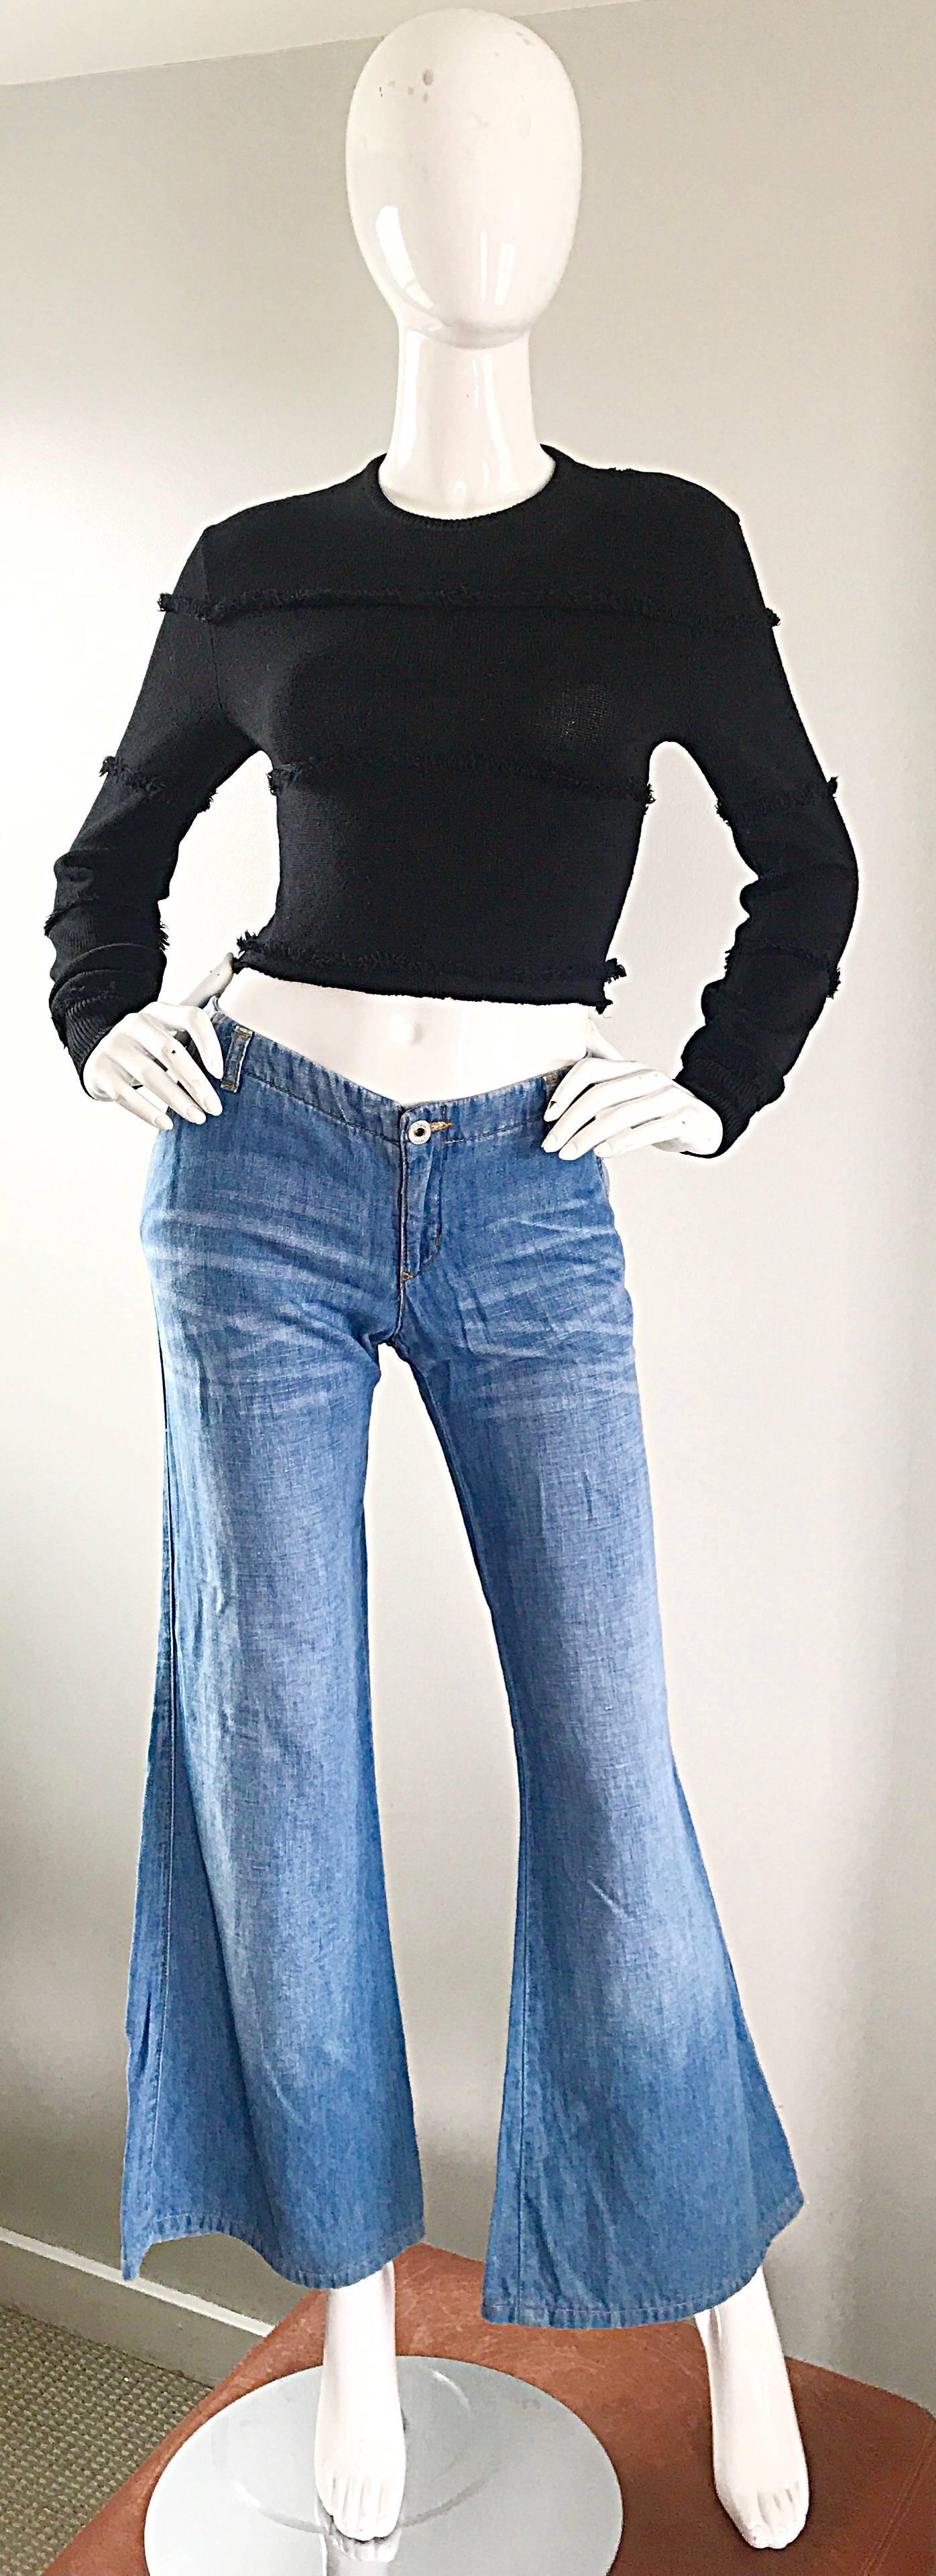 Noir Early Gianni Versace 1980s Sexy Black Fringe 80s Vintage Cotton Sweater Crop Top en vente